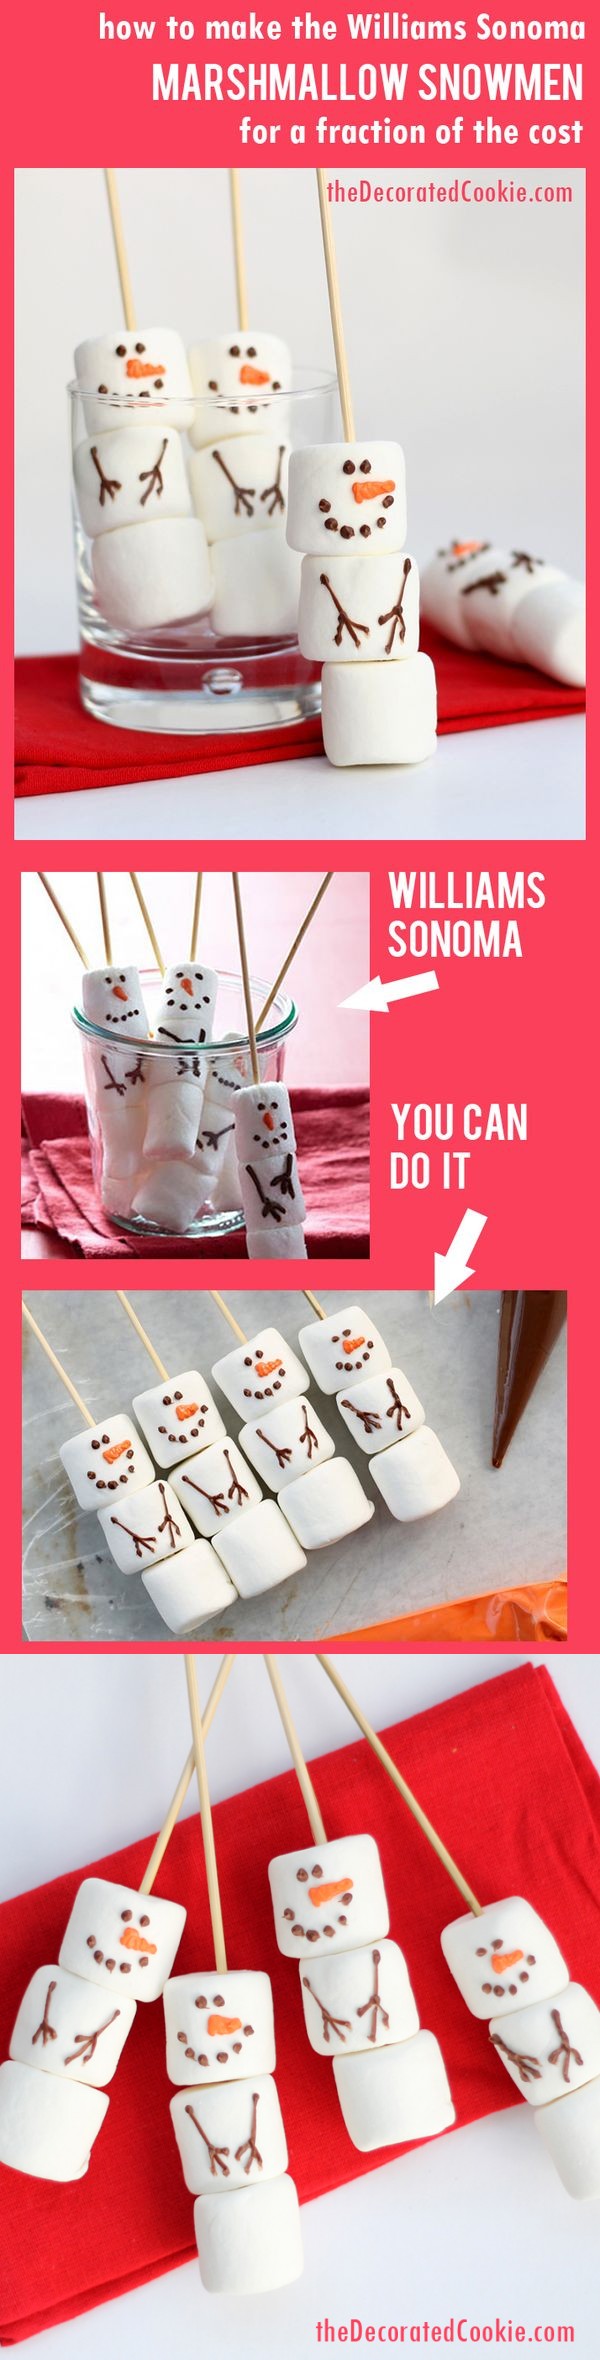 DIY marshmallow snowmen stirrers from the Williams-Sonoma catalog